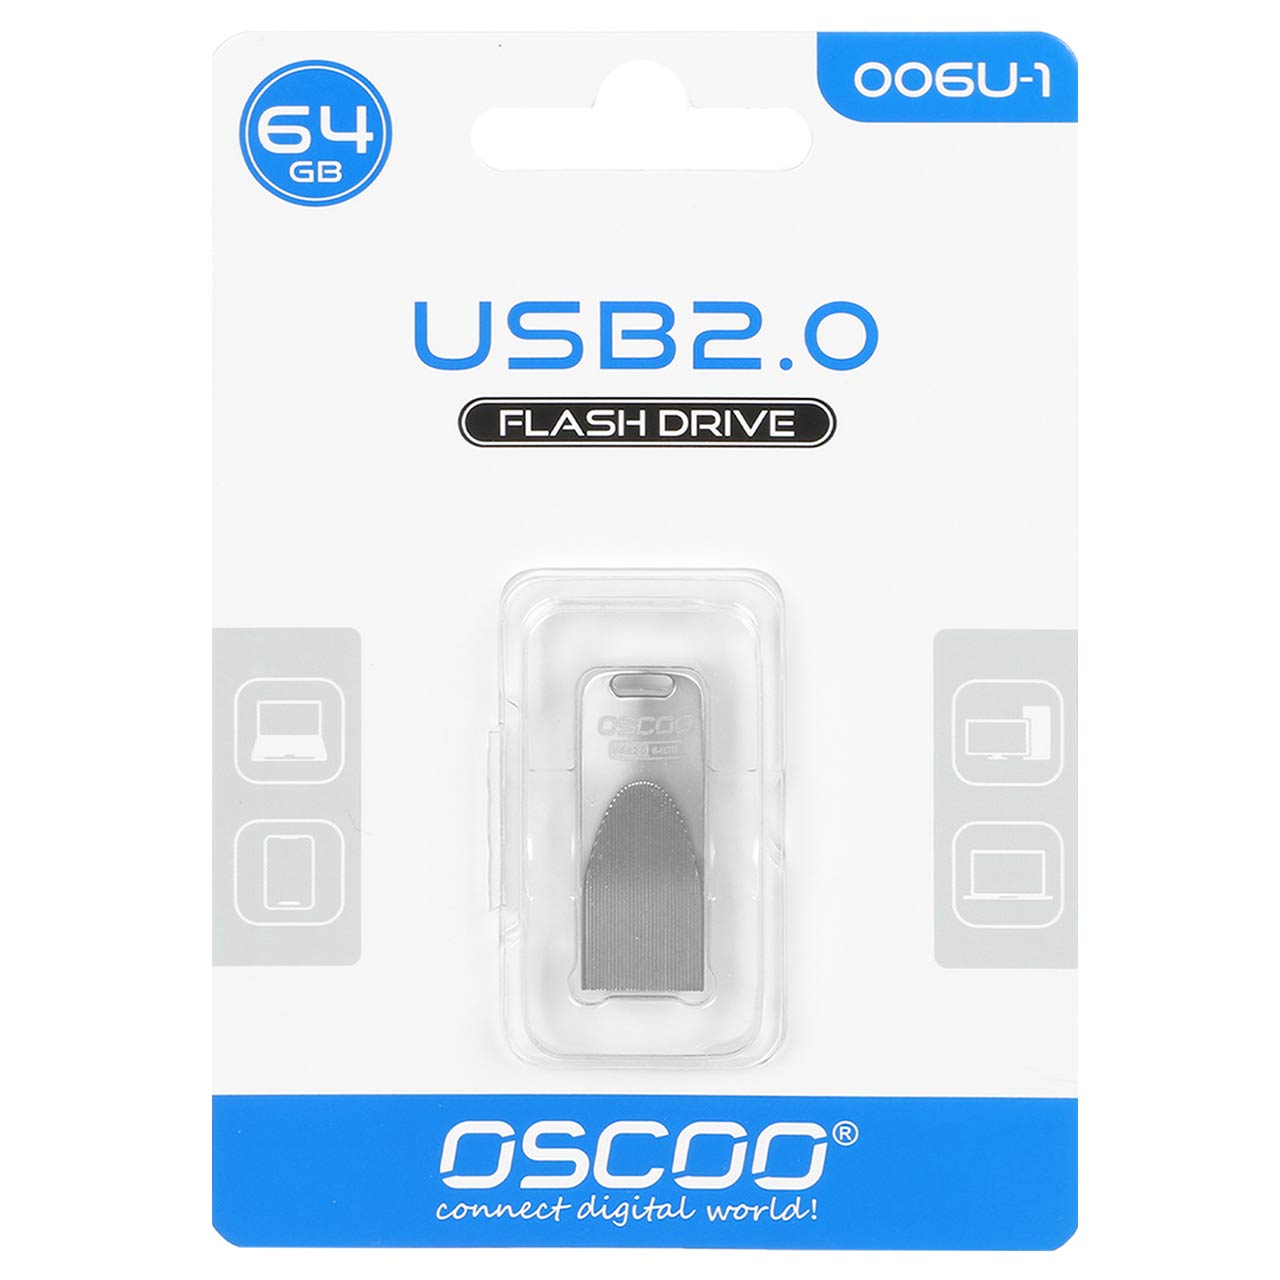 OSCOO 006U-1 USB2.0 Flash Memory-64GB نقره ای (گارانتی سورین)